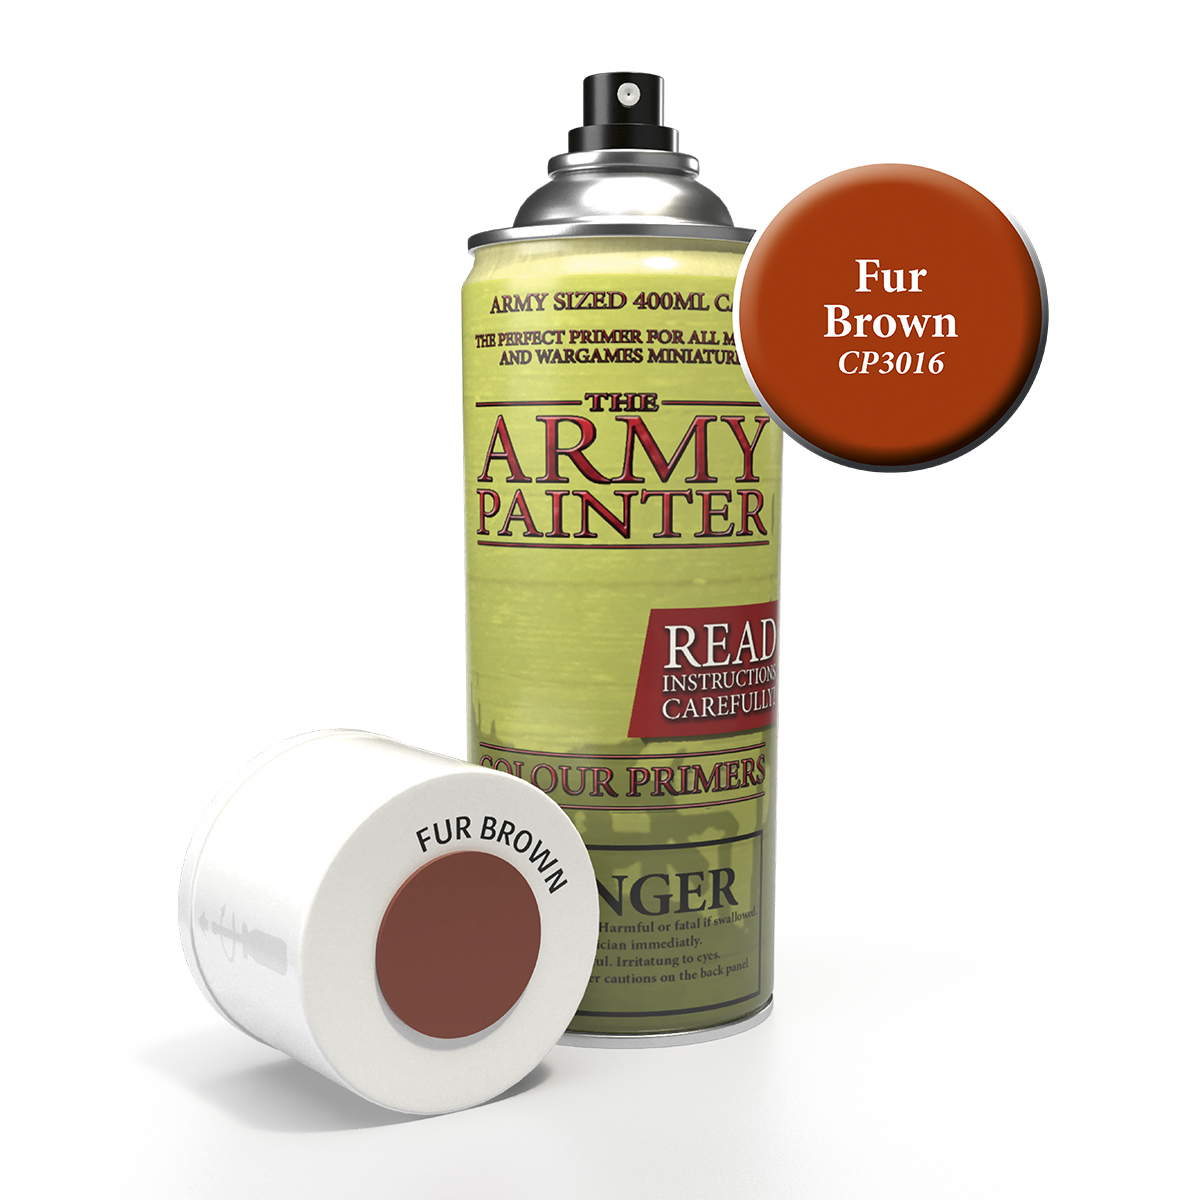 ArmyPainter Colorspray Fur Brown